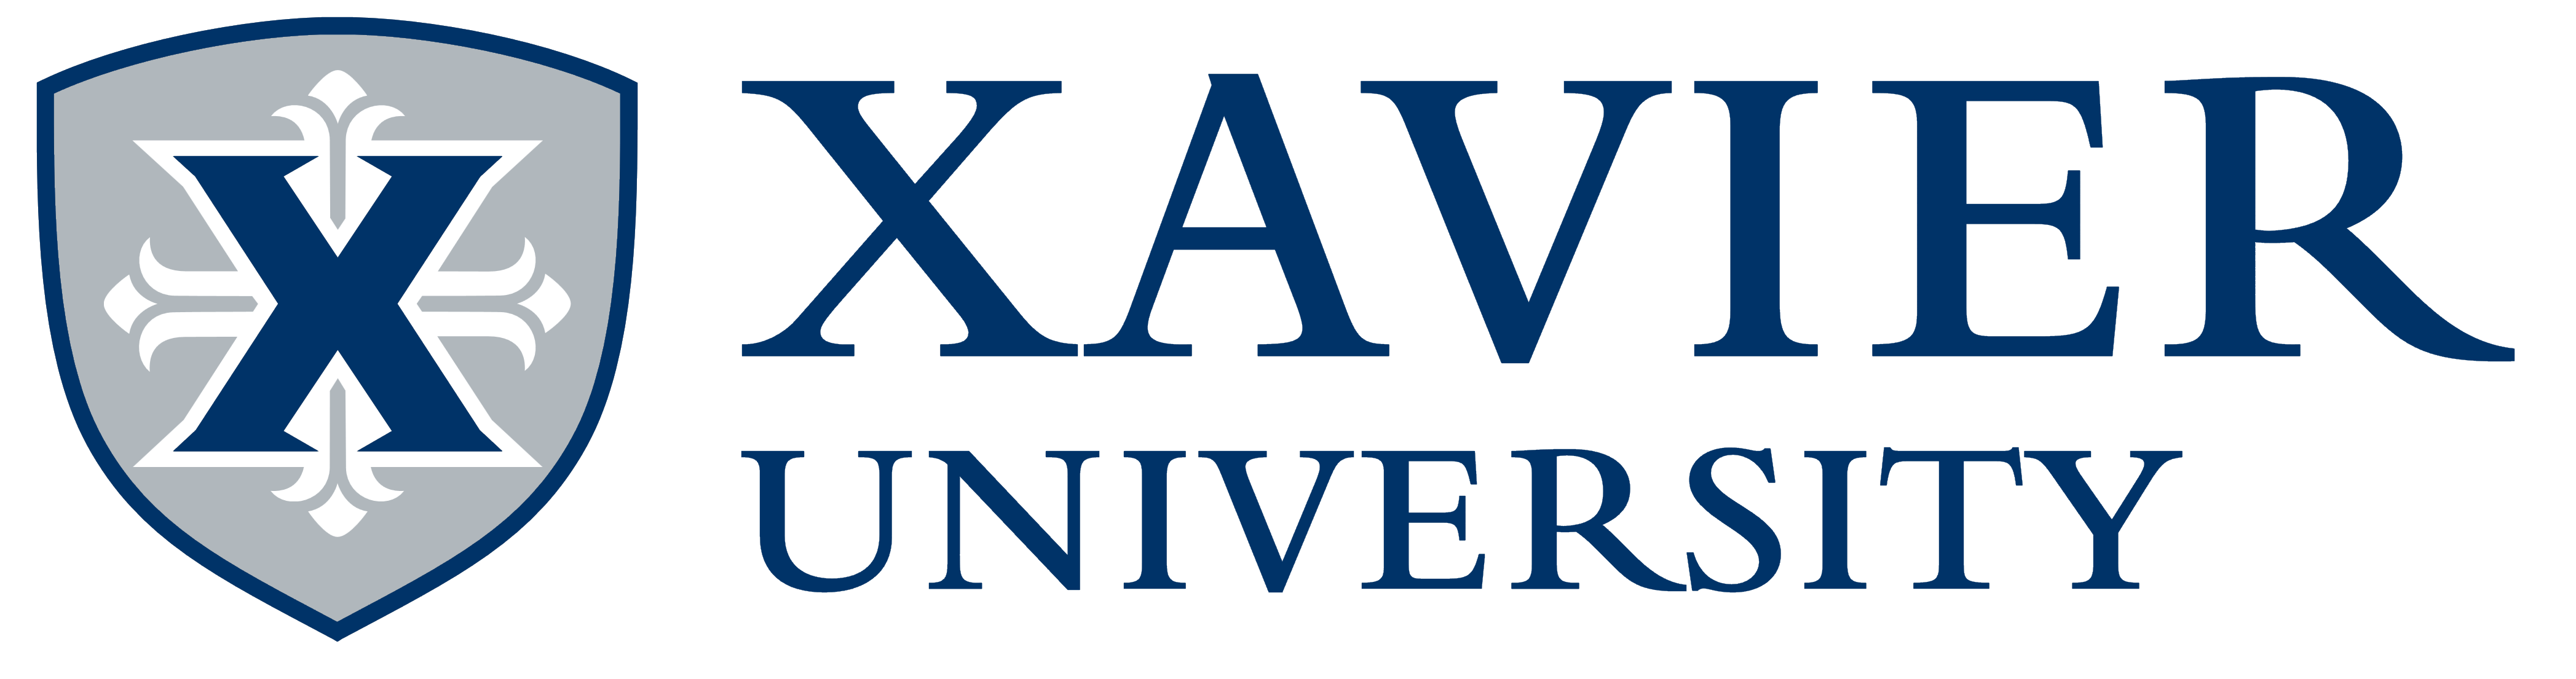 Xavier Logo - Xavier University – Logos Download